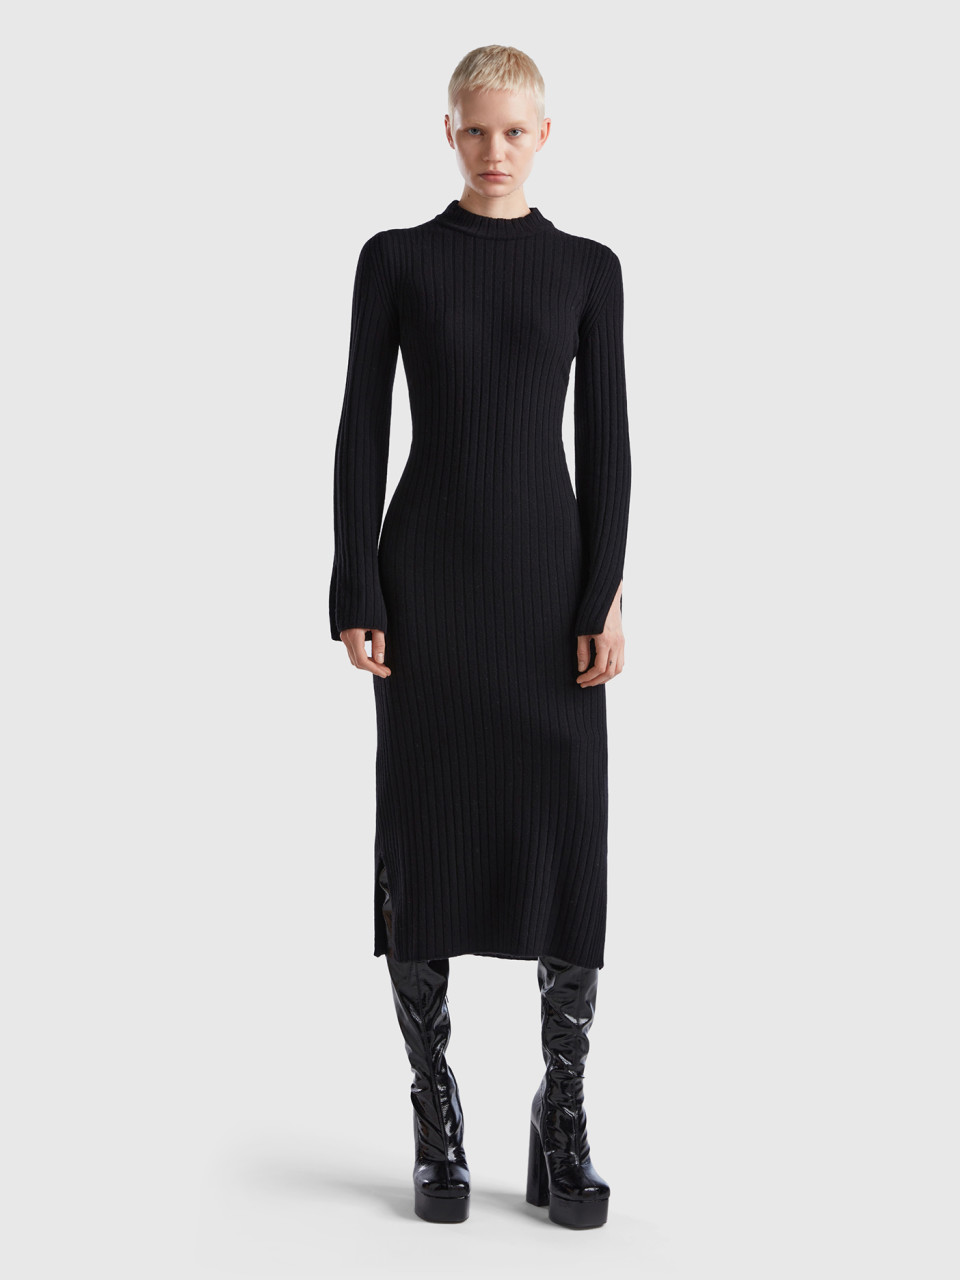 Benetton, Knit Dress With Slits, Black, Women